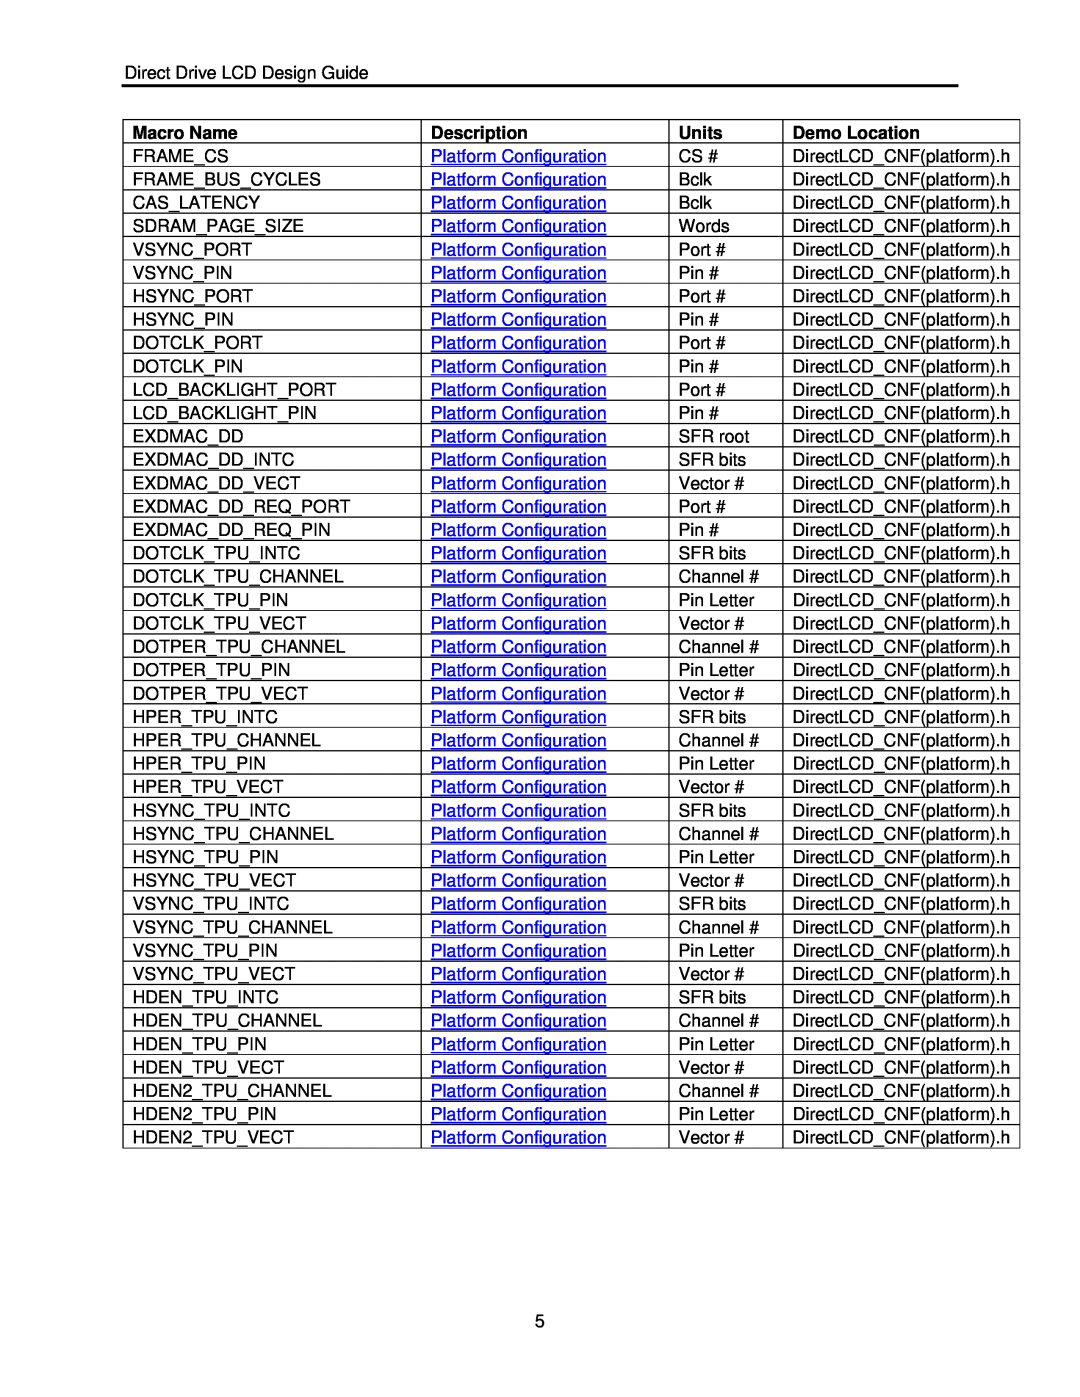 Renesas H8SX user manual Macro Name, Description, Units, Demo Location 